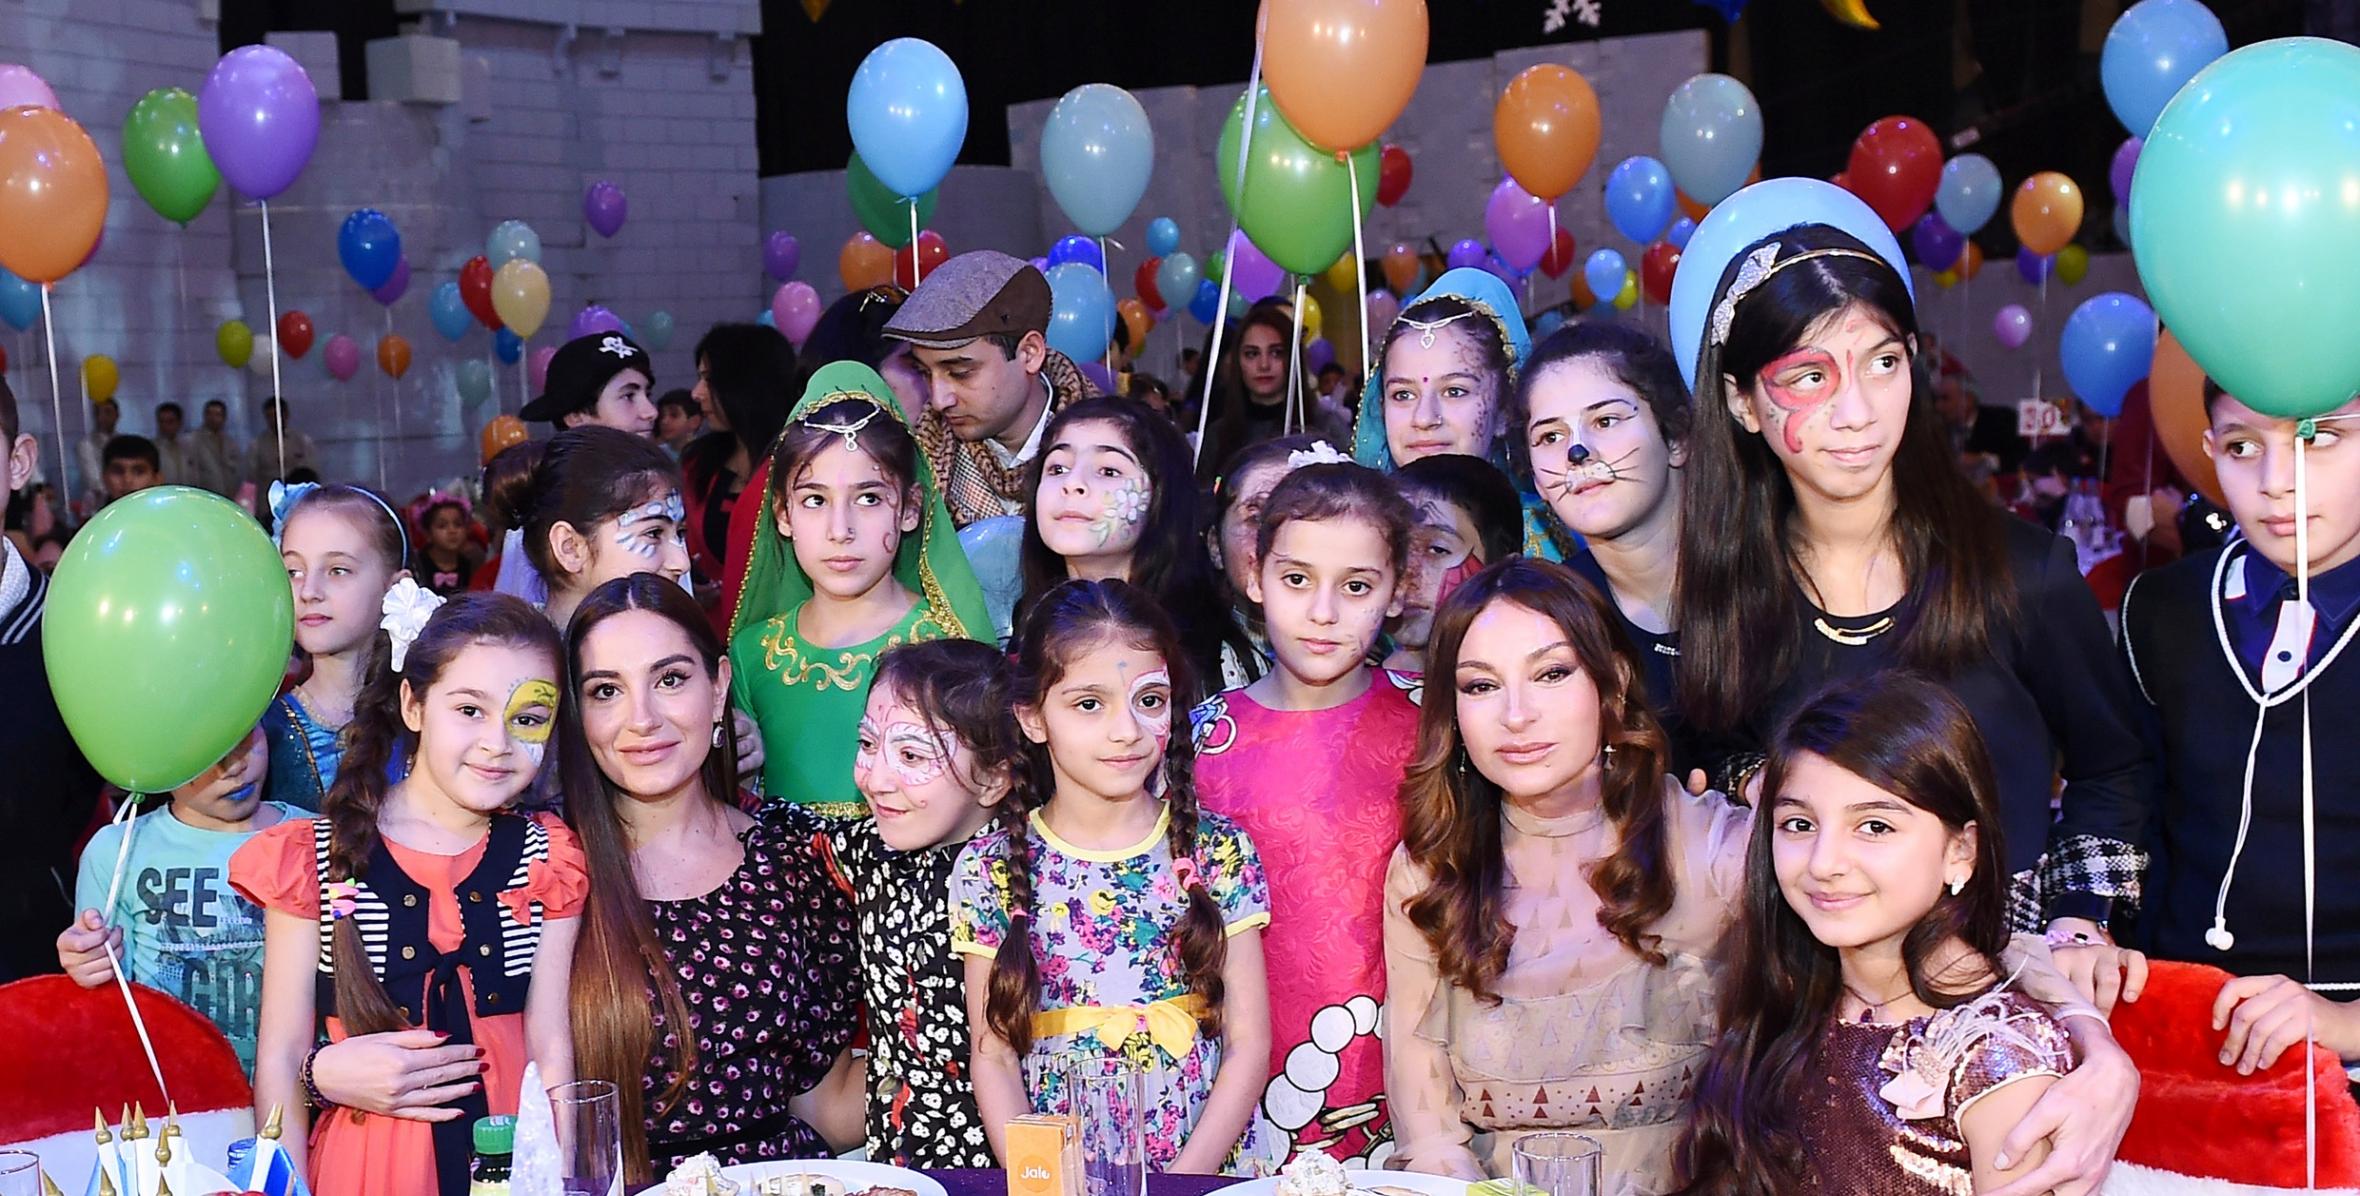 Heydar Aliyev Foundation arranges annual New Year party for children